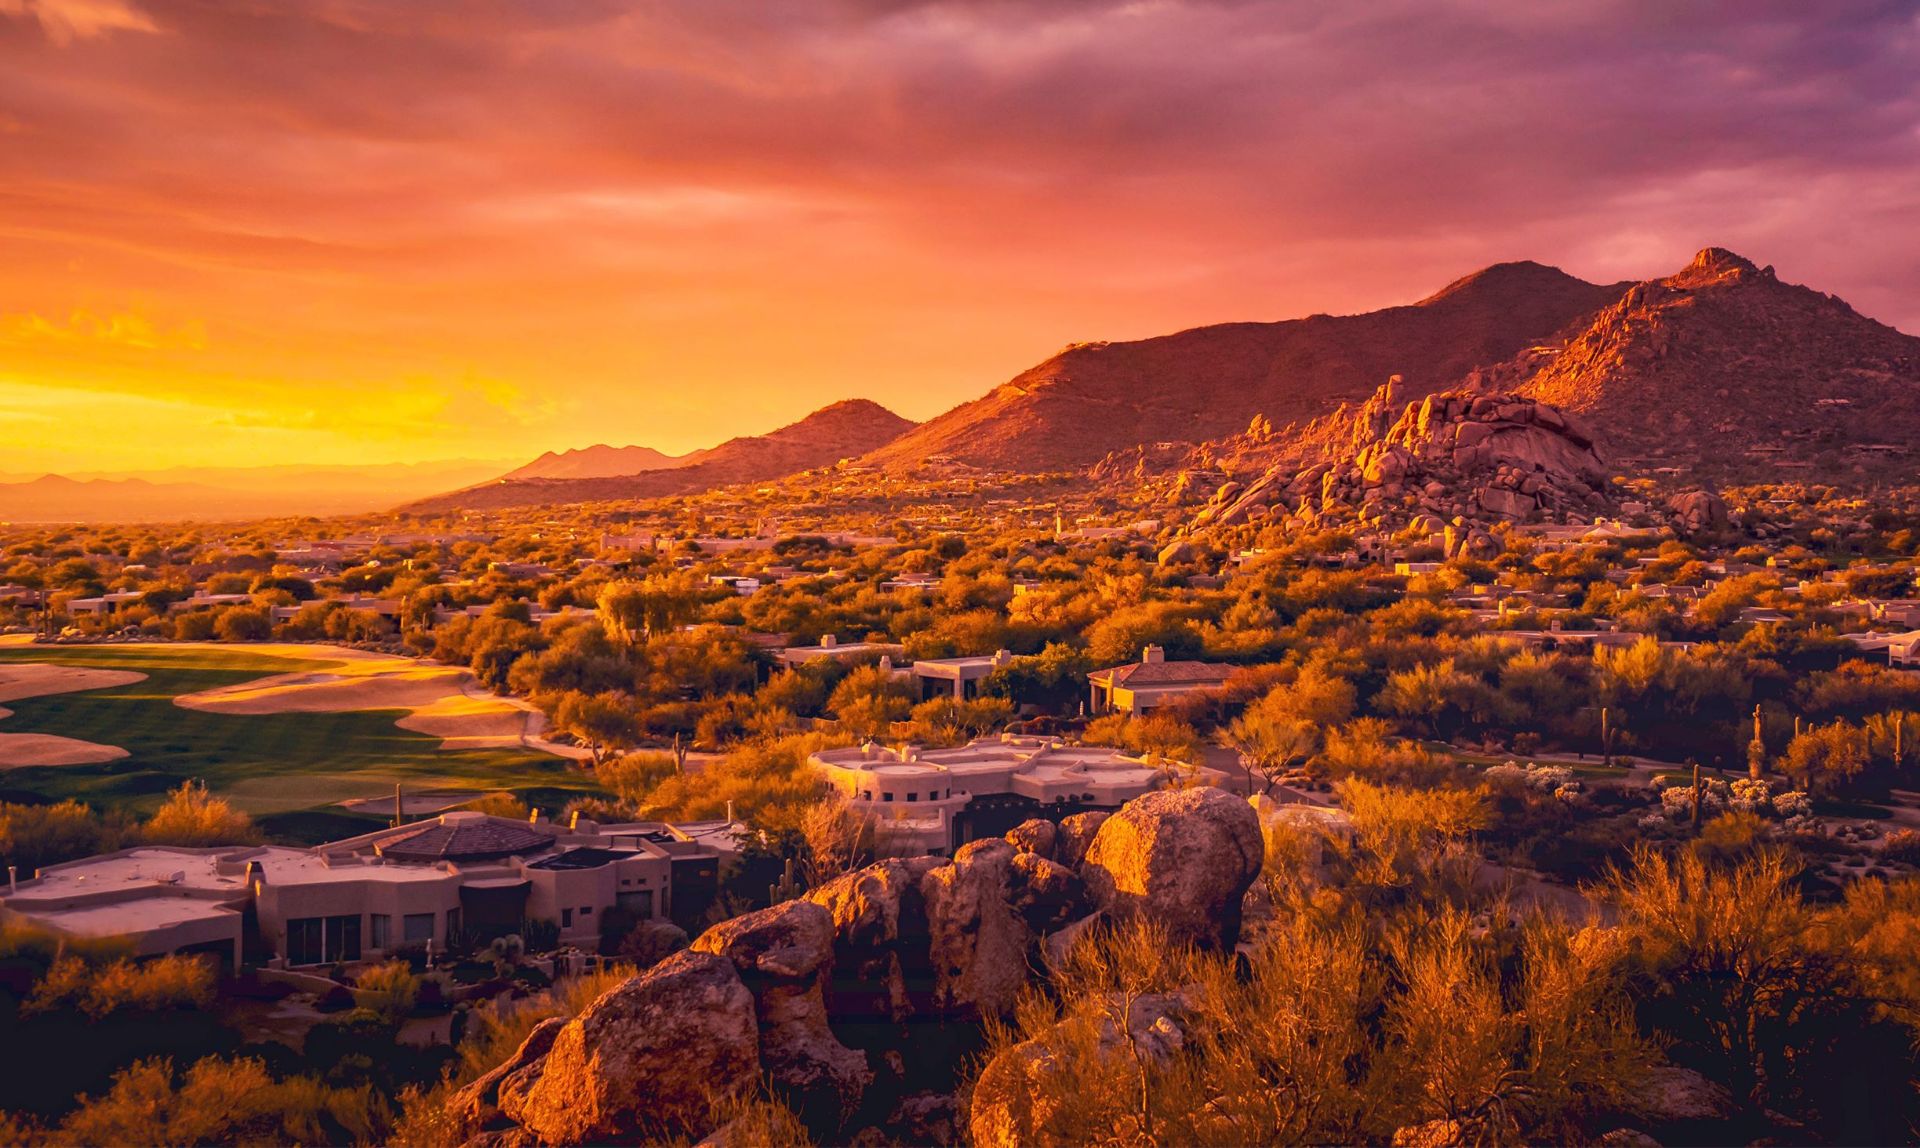 Explore Arizona Desert and Mountain Views in Cochise County!